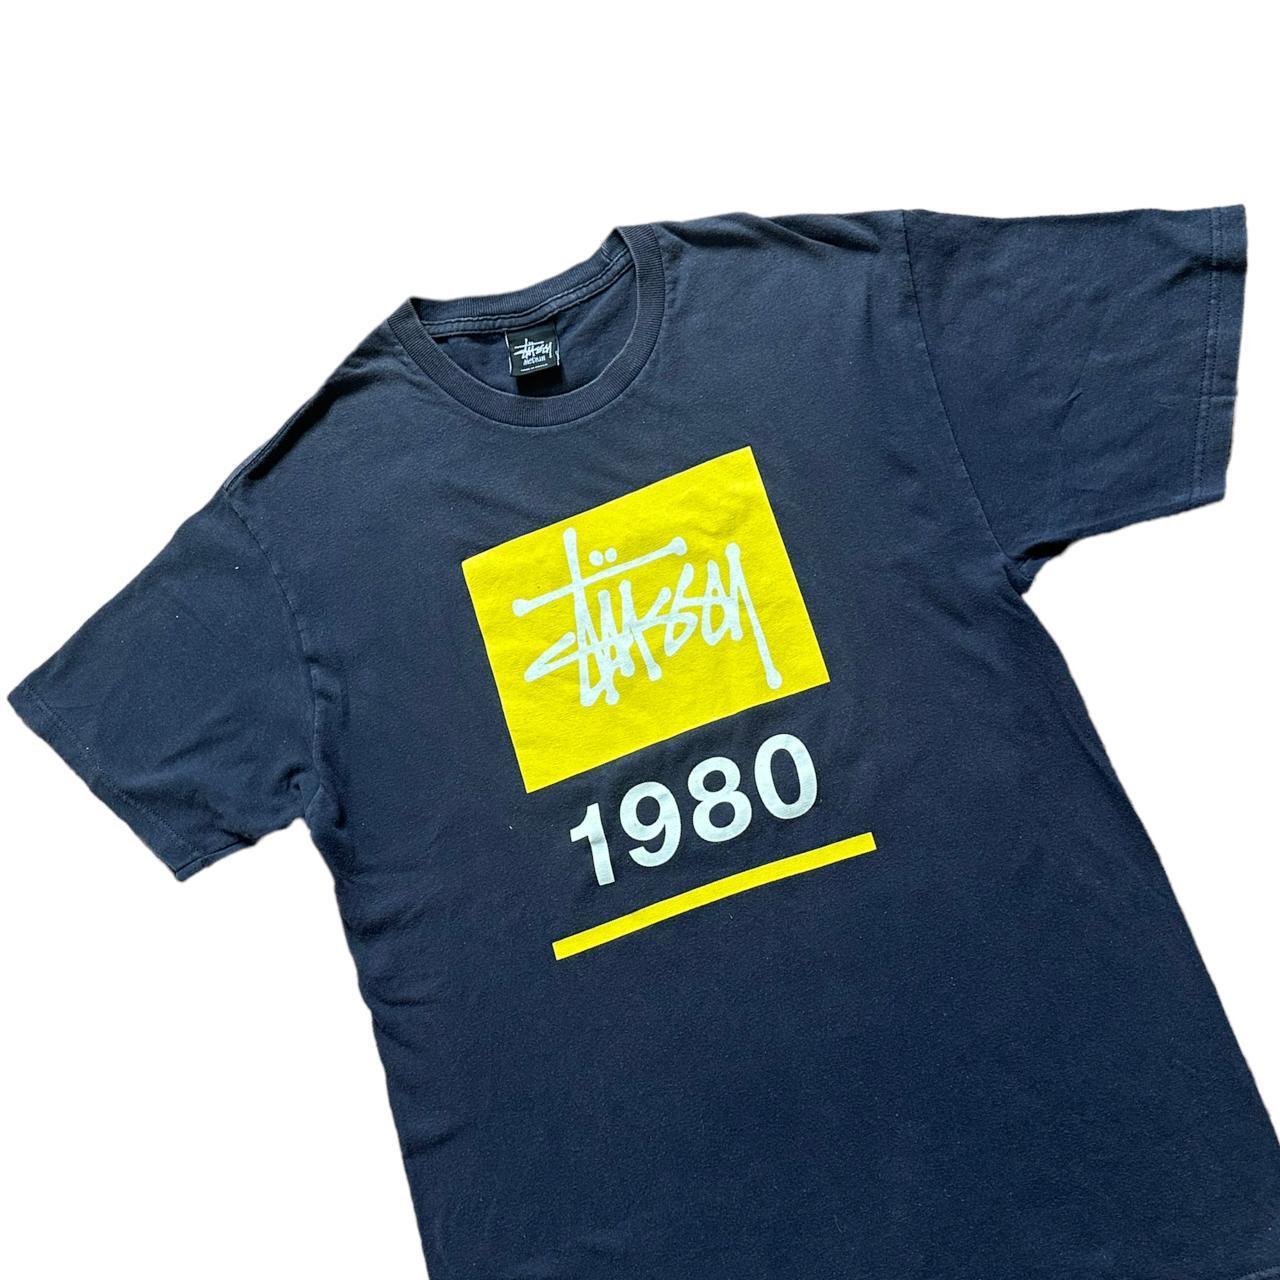 Stussy 1980 logo T-shirt - Known Source